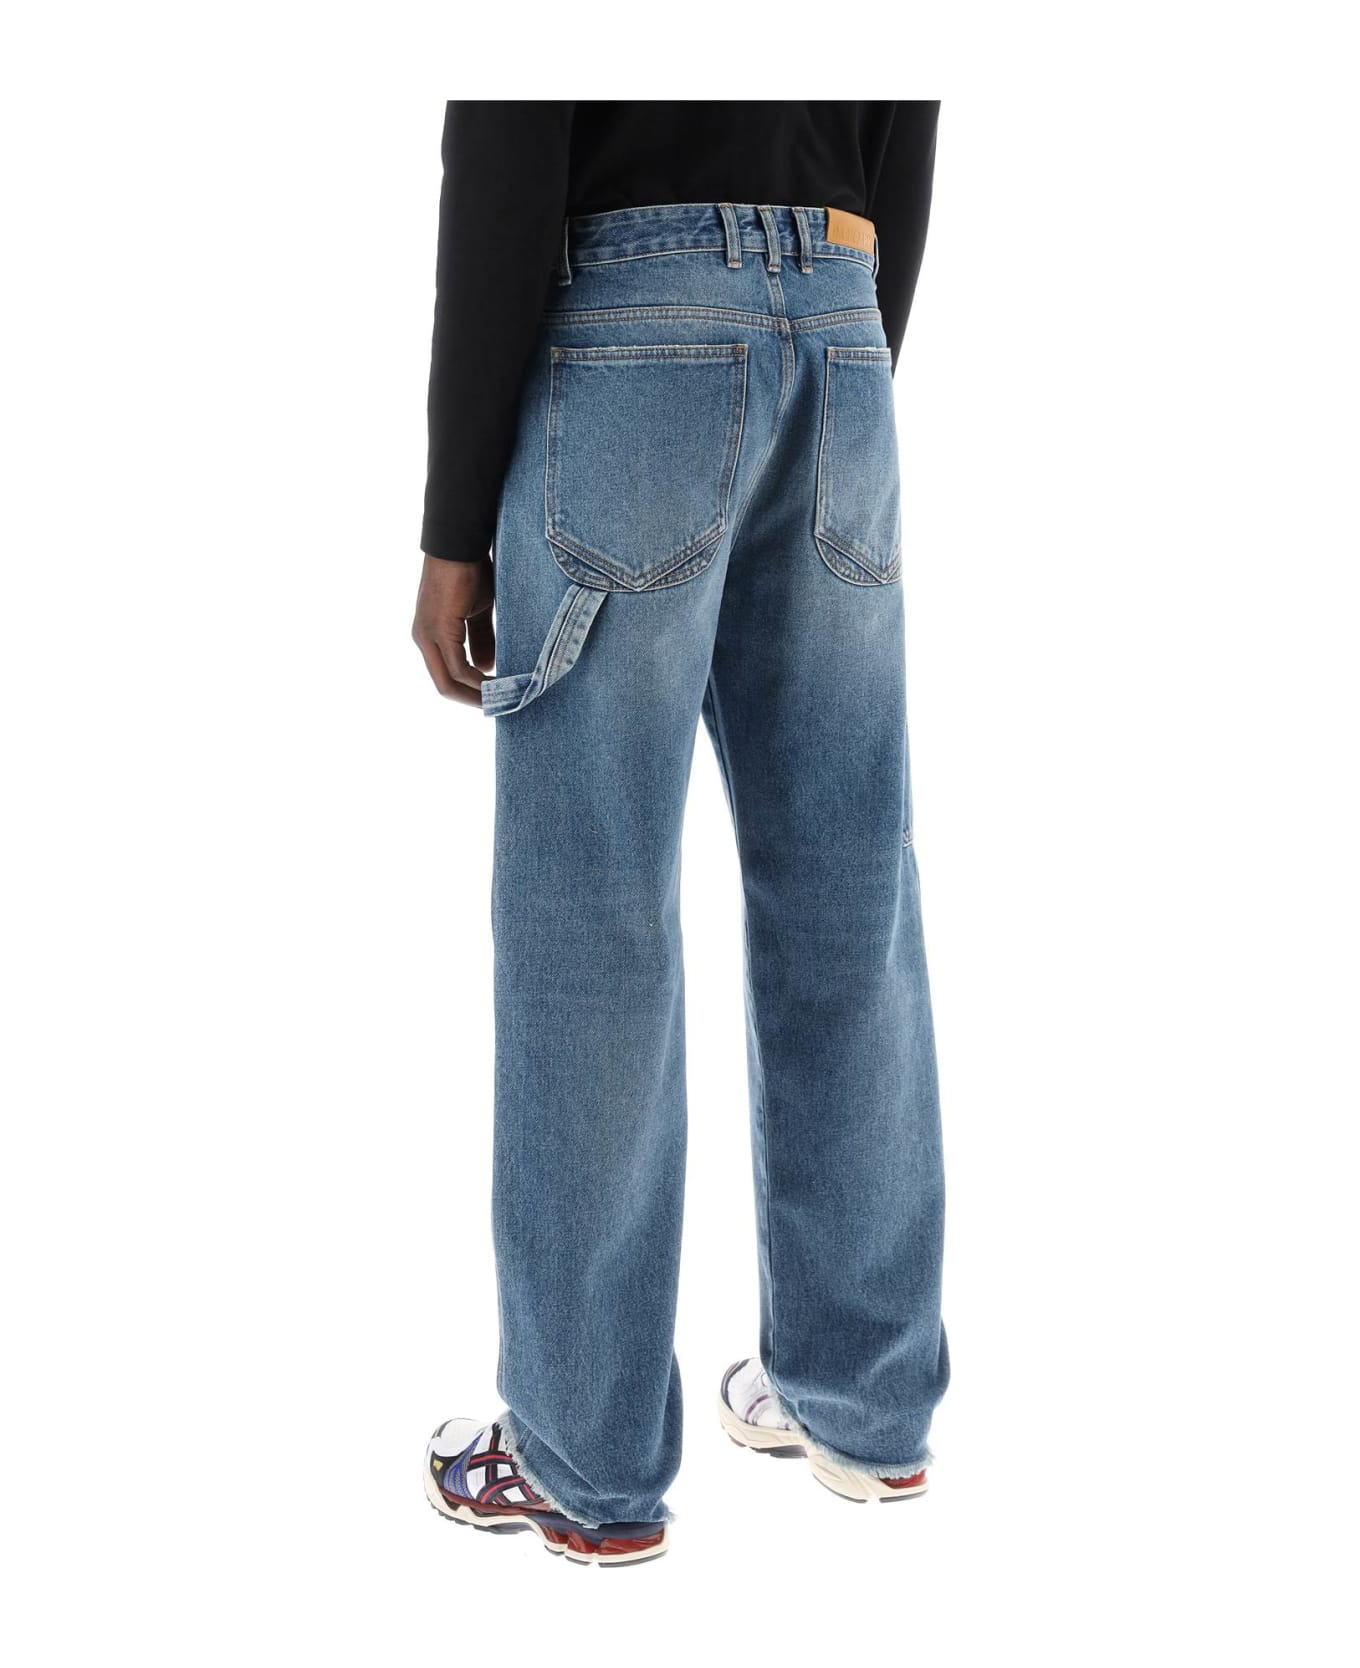 DARKPARK John Workwear Jeans - MEDIUM WASH (Blue)